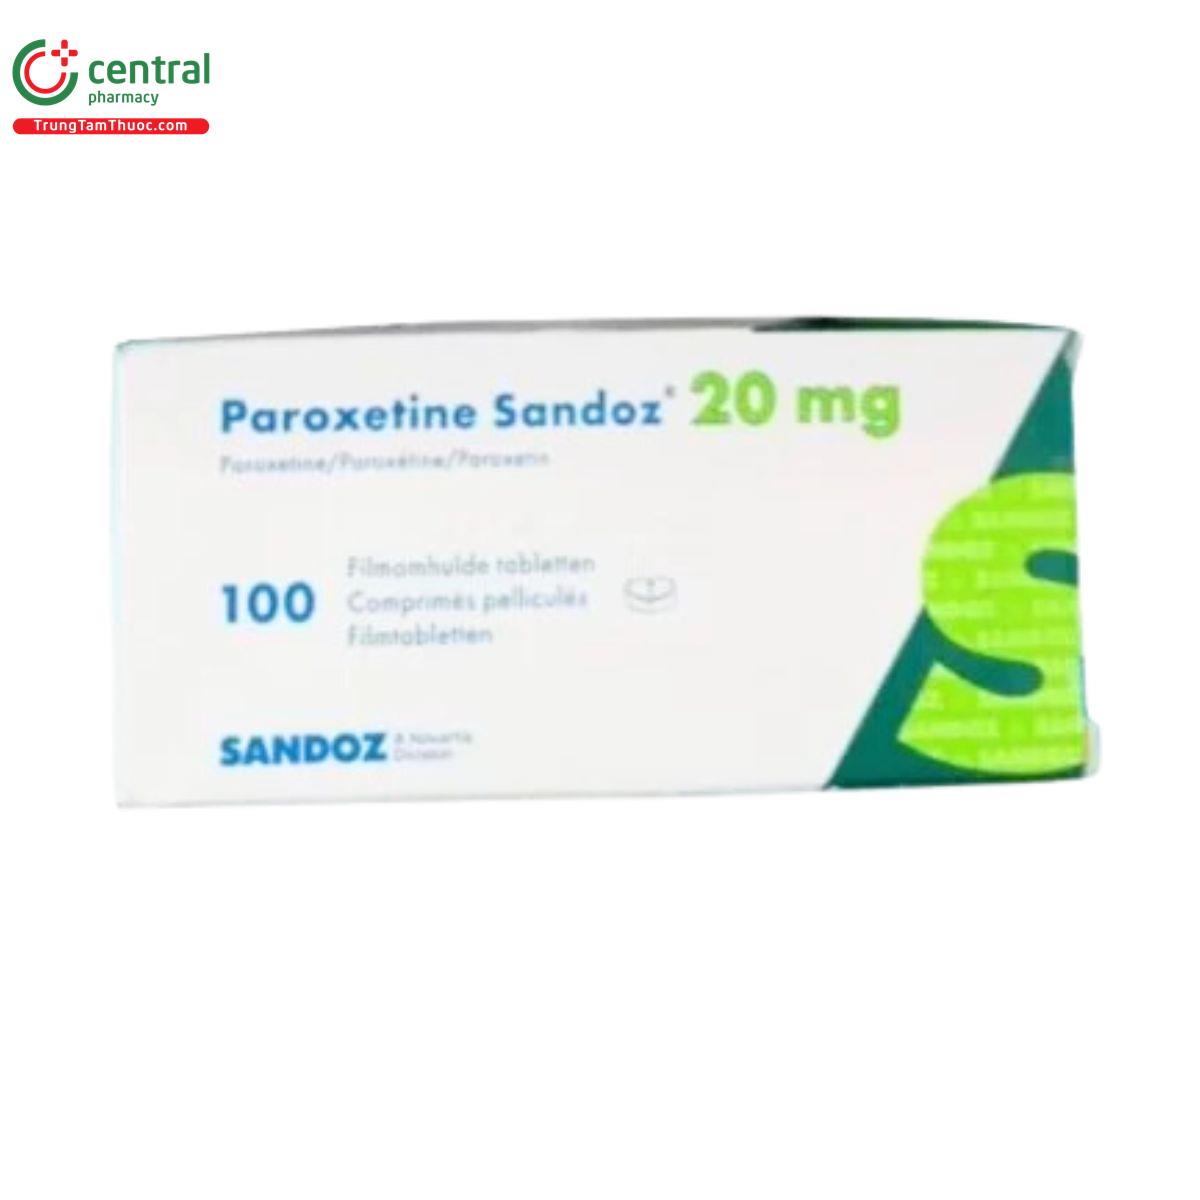 thuoc paroxetine sandoz 20mg 1 H3281